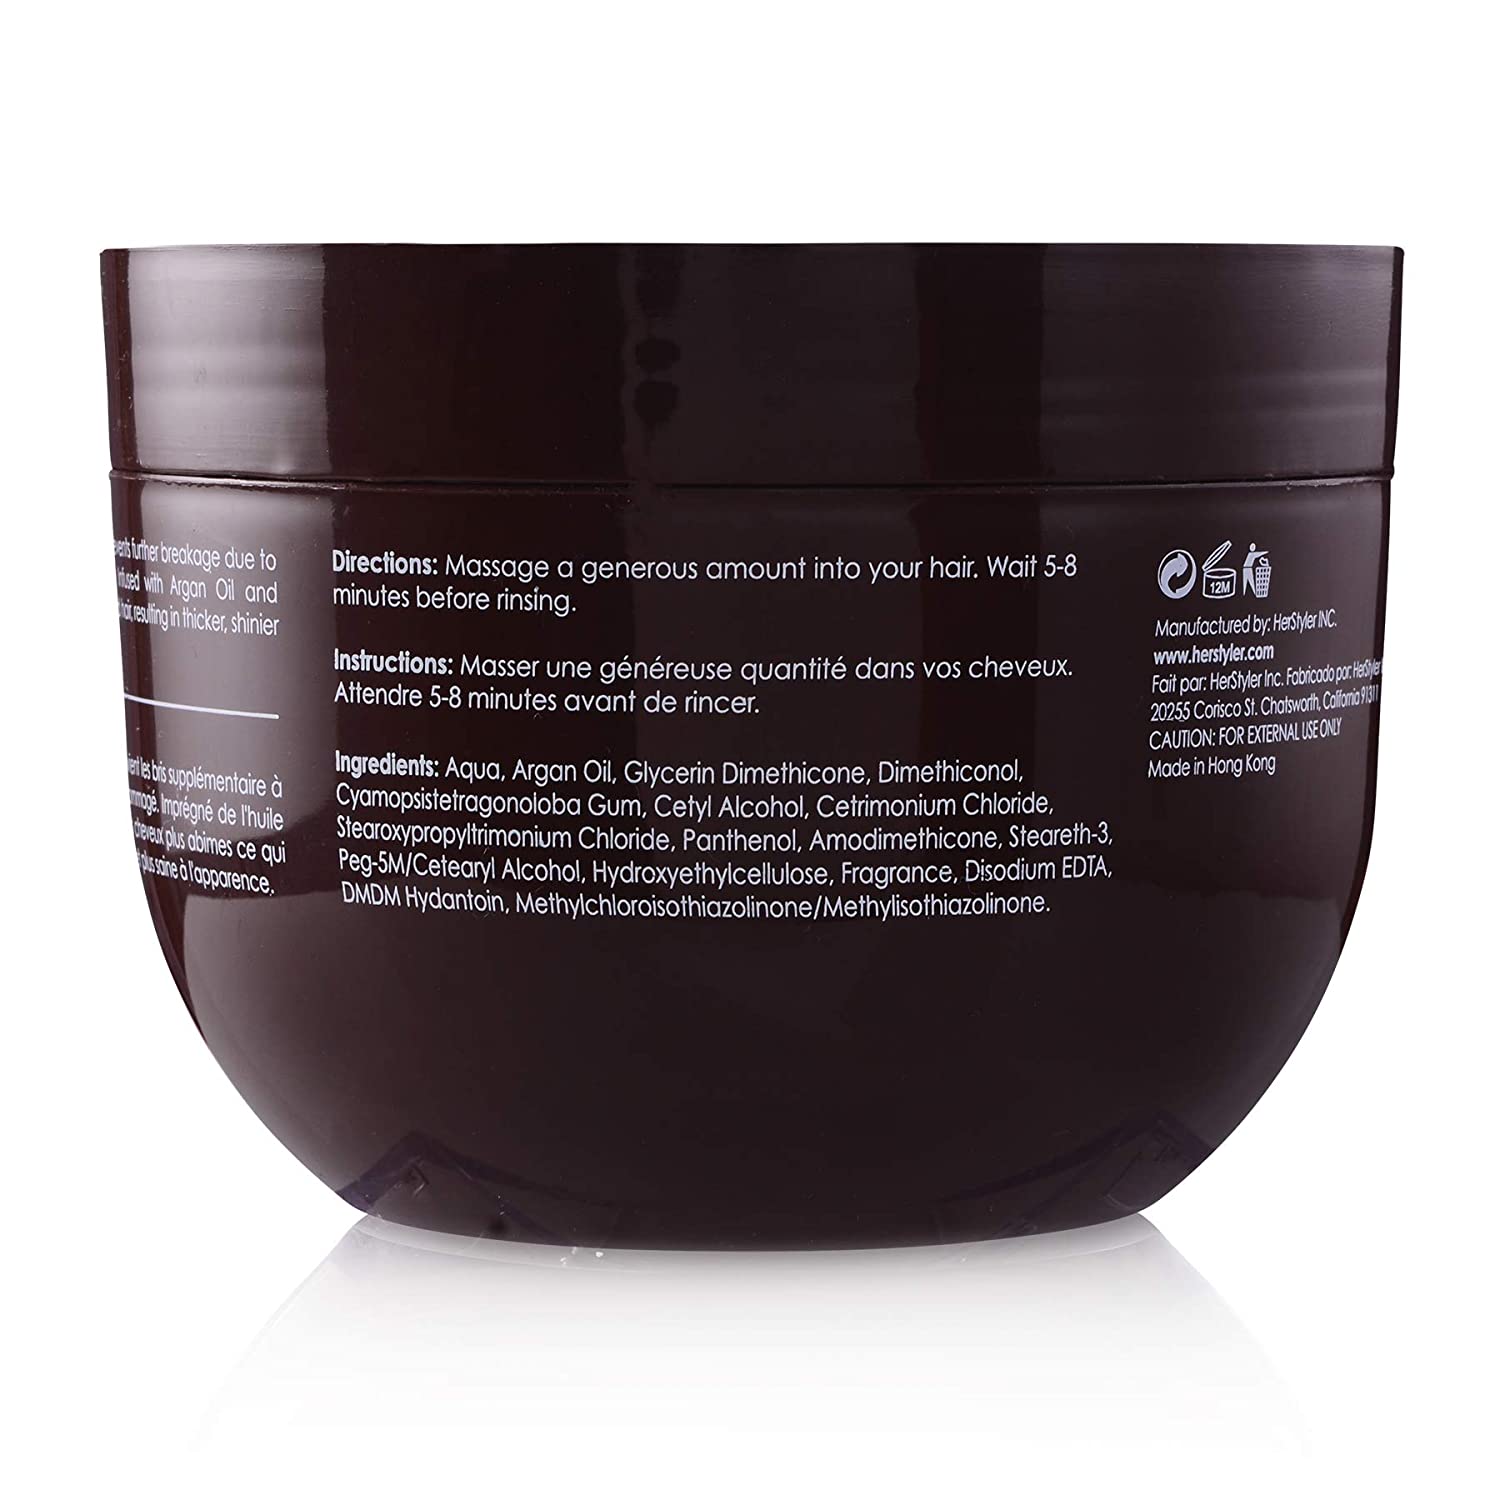 Herstyler Argan Oil Hair Mask - Deep Conditioning Hair Mask For Dry Damaged Hair - Anti-Frizz Hair Mask - 18 Fl. Oz. / 500 Ml